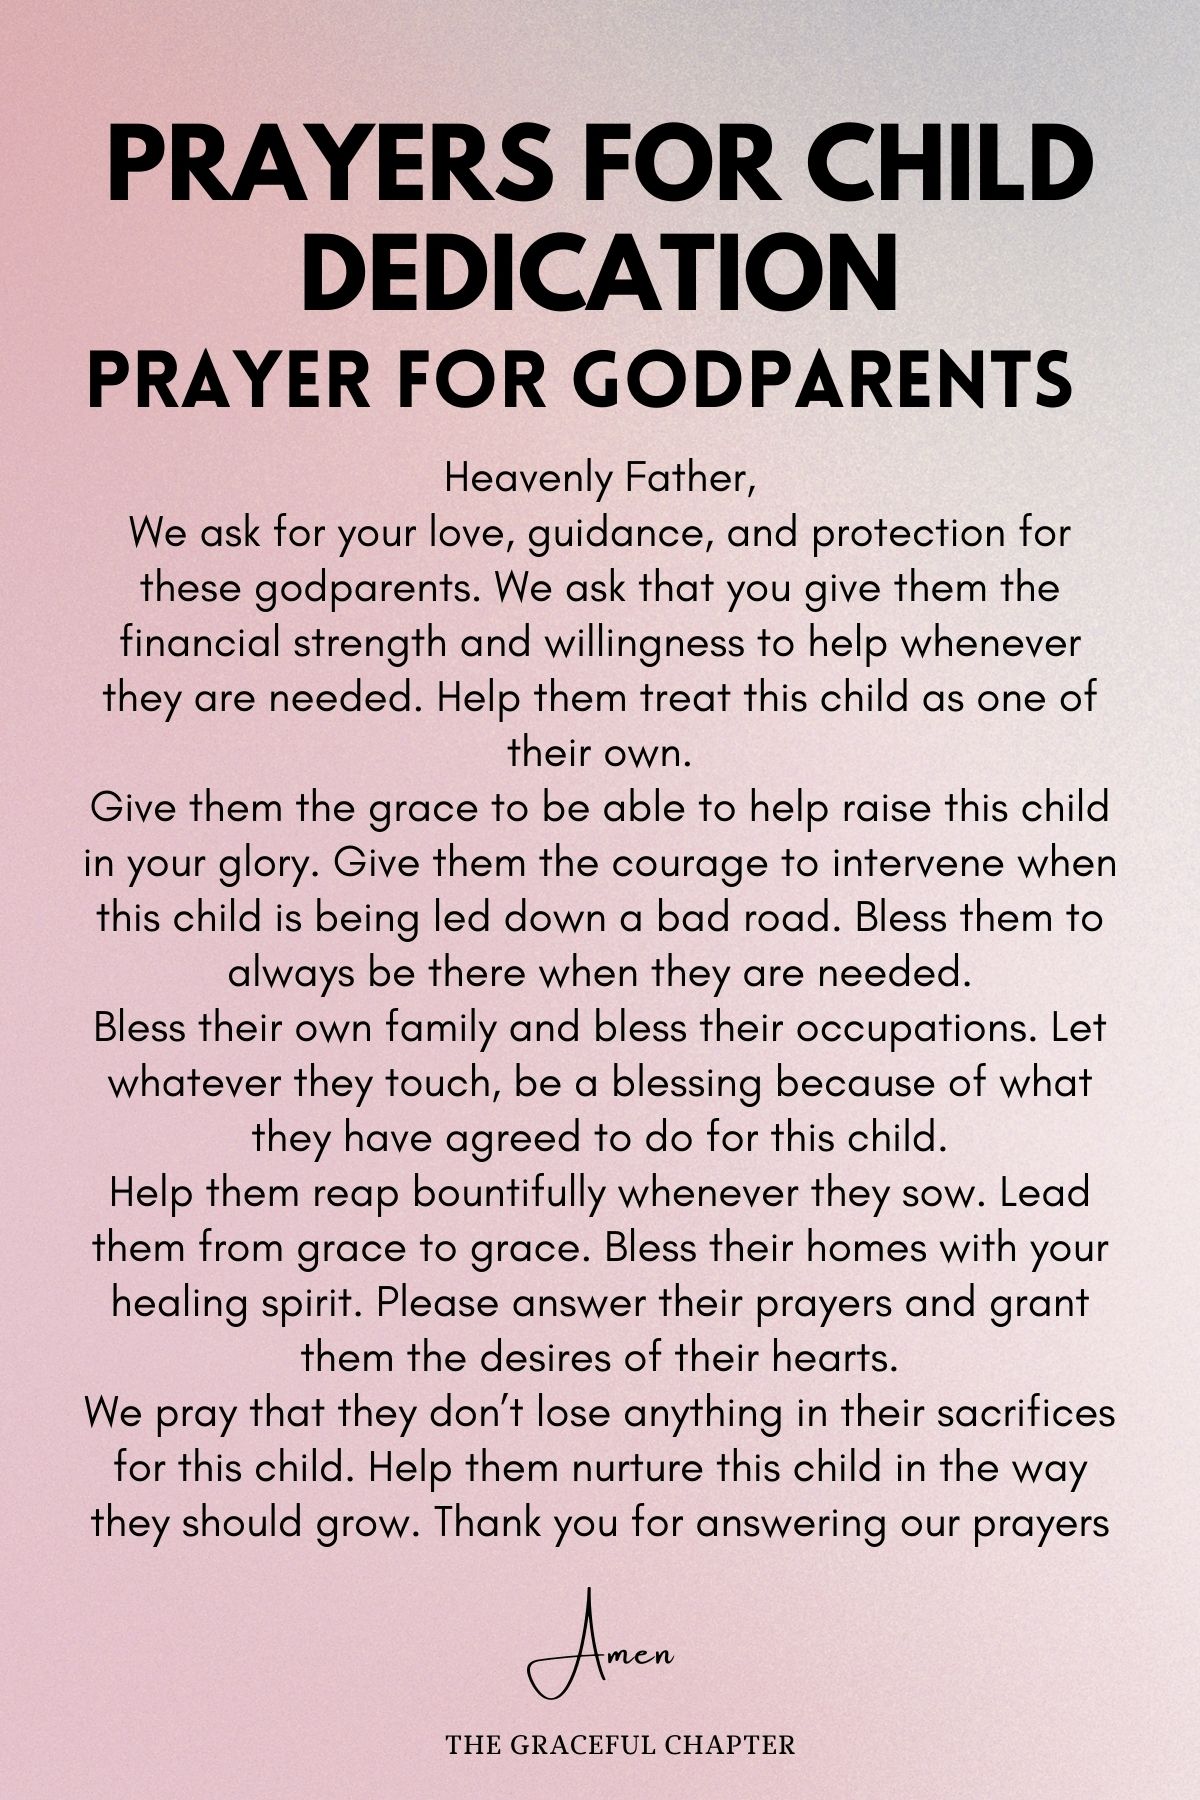 prayers for child dedication - Prayer for Godparents